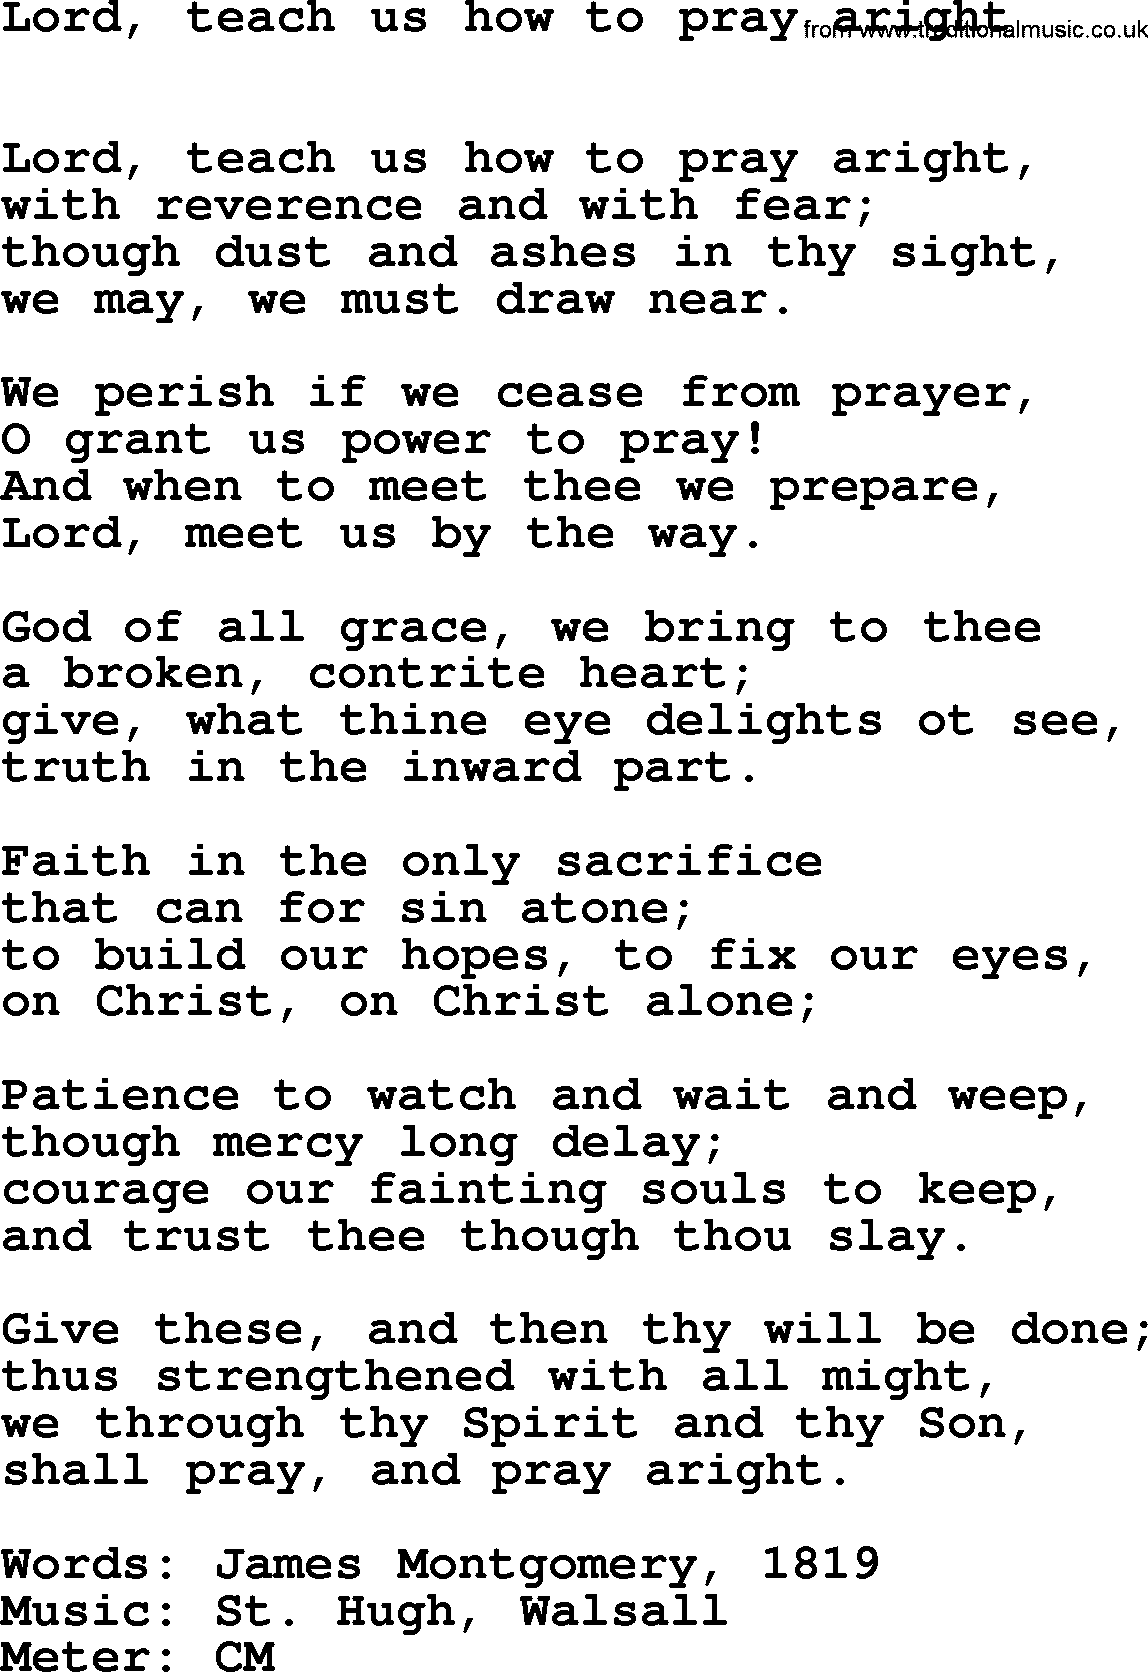 Book of Common Praise Hymn: Lord, Teach Us How To Pray Aright.txt lyrics with midi music